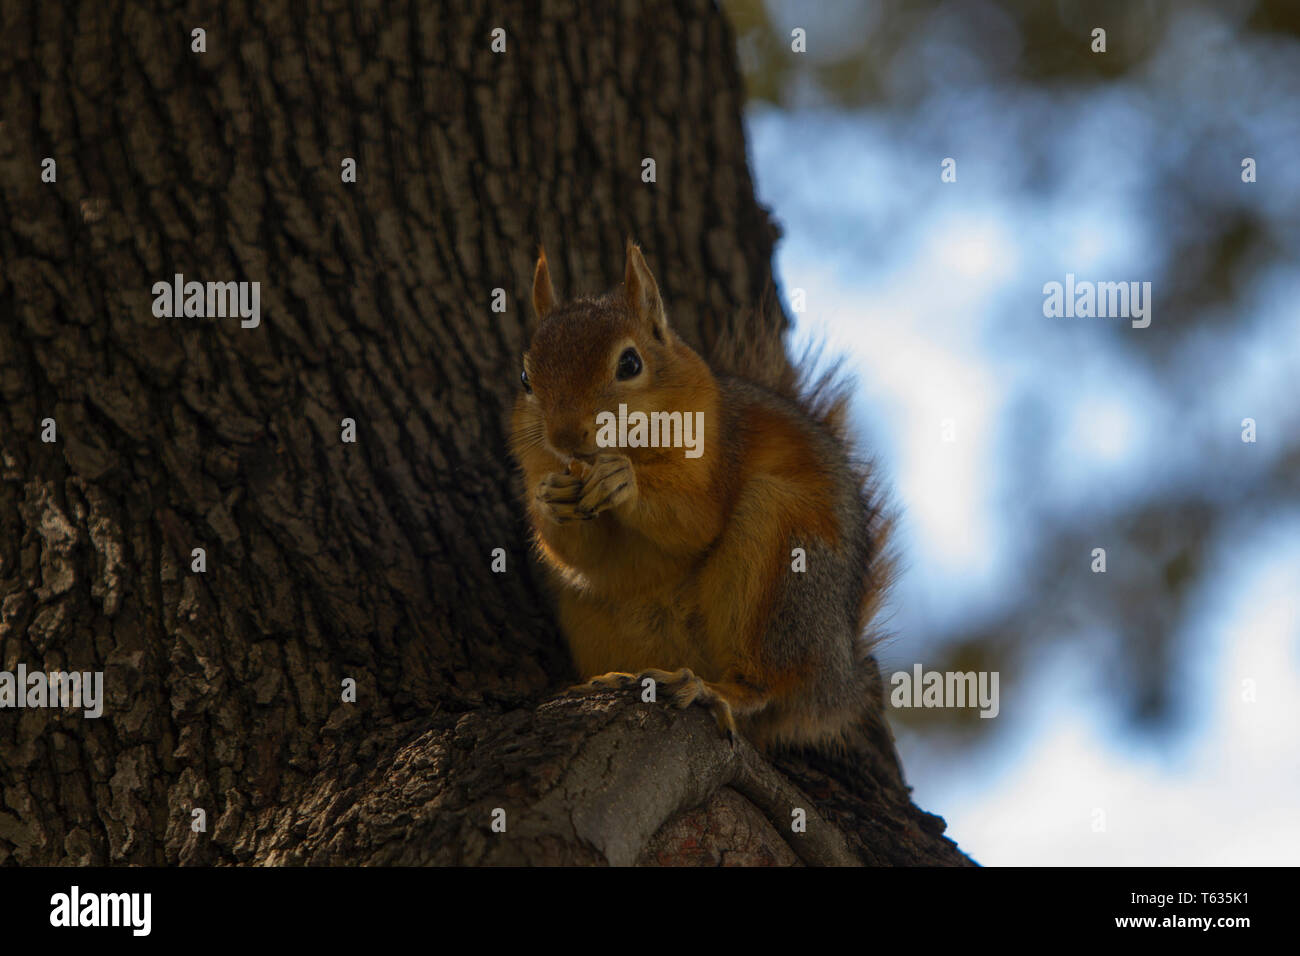 Close up portrait of a Sciurus Anomalus, Caucasian squirrel on a tree trunk feeding itself. Stock Photo